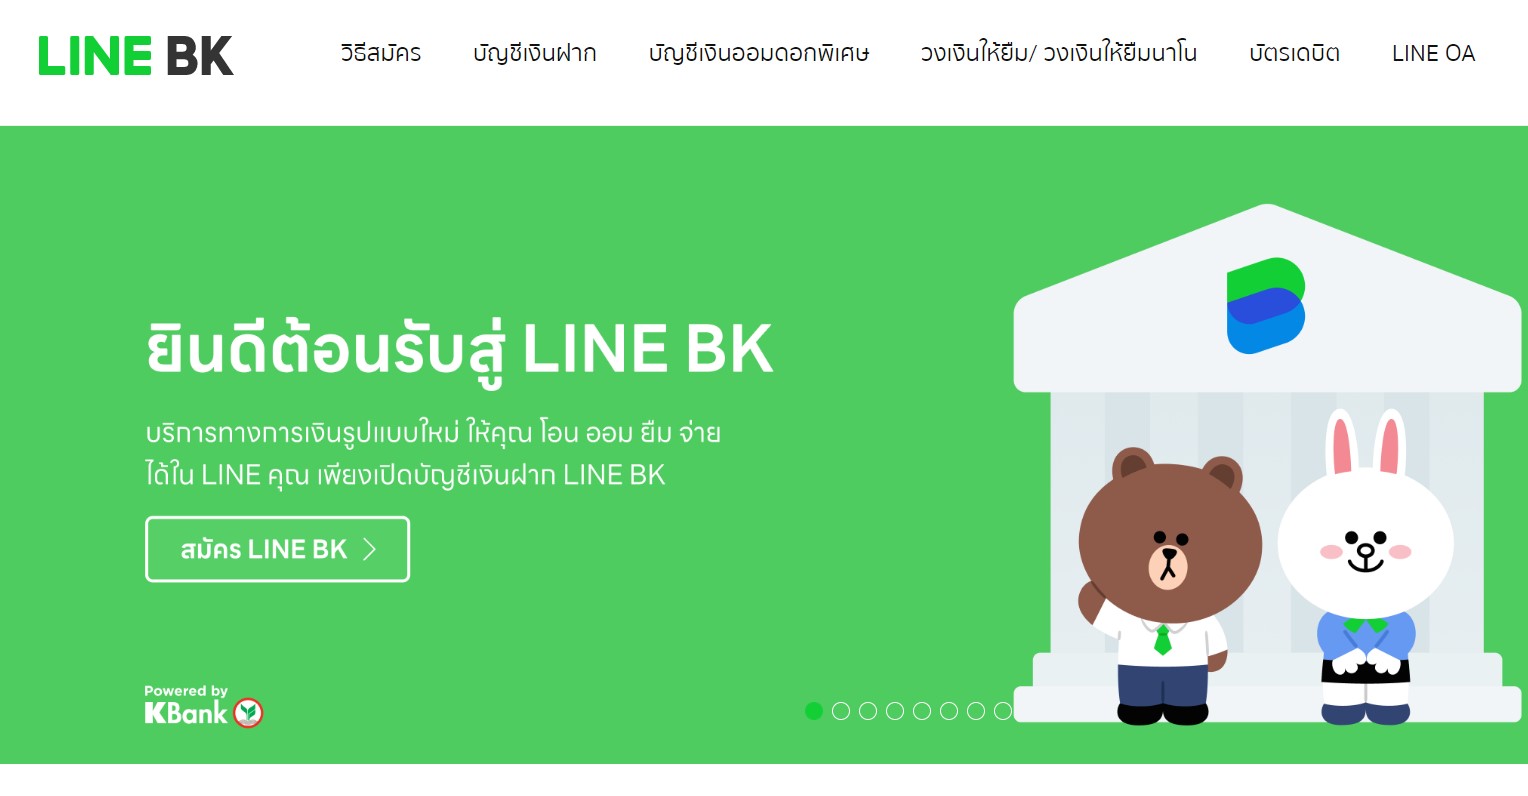 Line BK